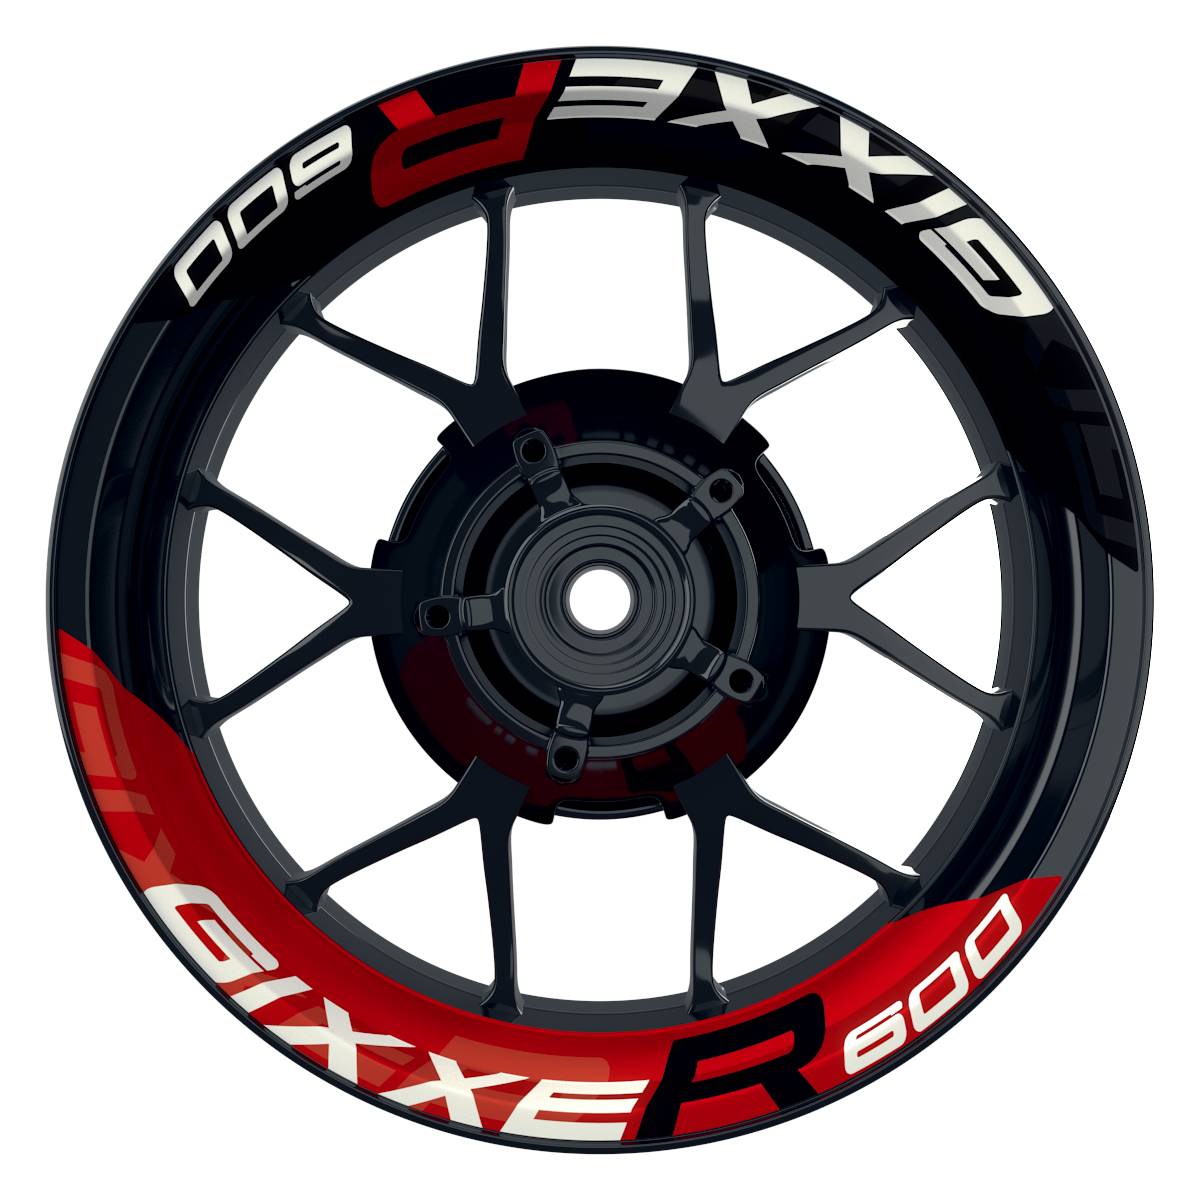 Wheelsticker Felgenaufkleber GIXXER600 halb halb V2 schwarz rot Frontansicht